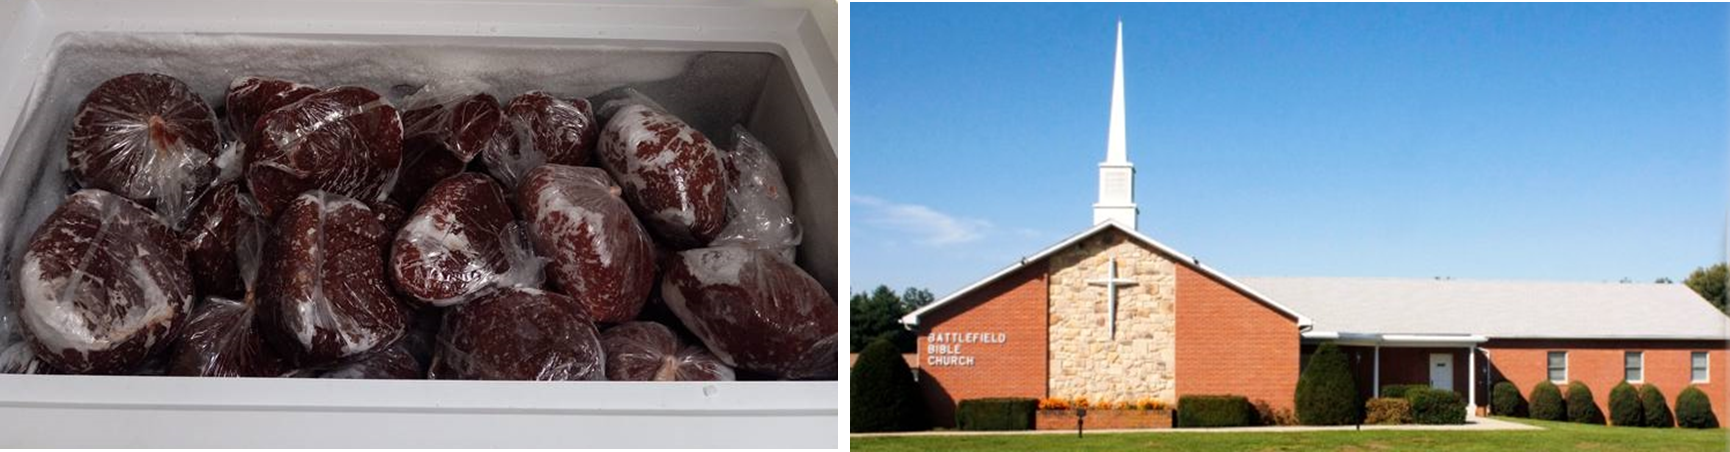 Battlefield Bible Church Meat Donation Building Orig